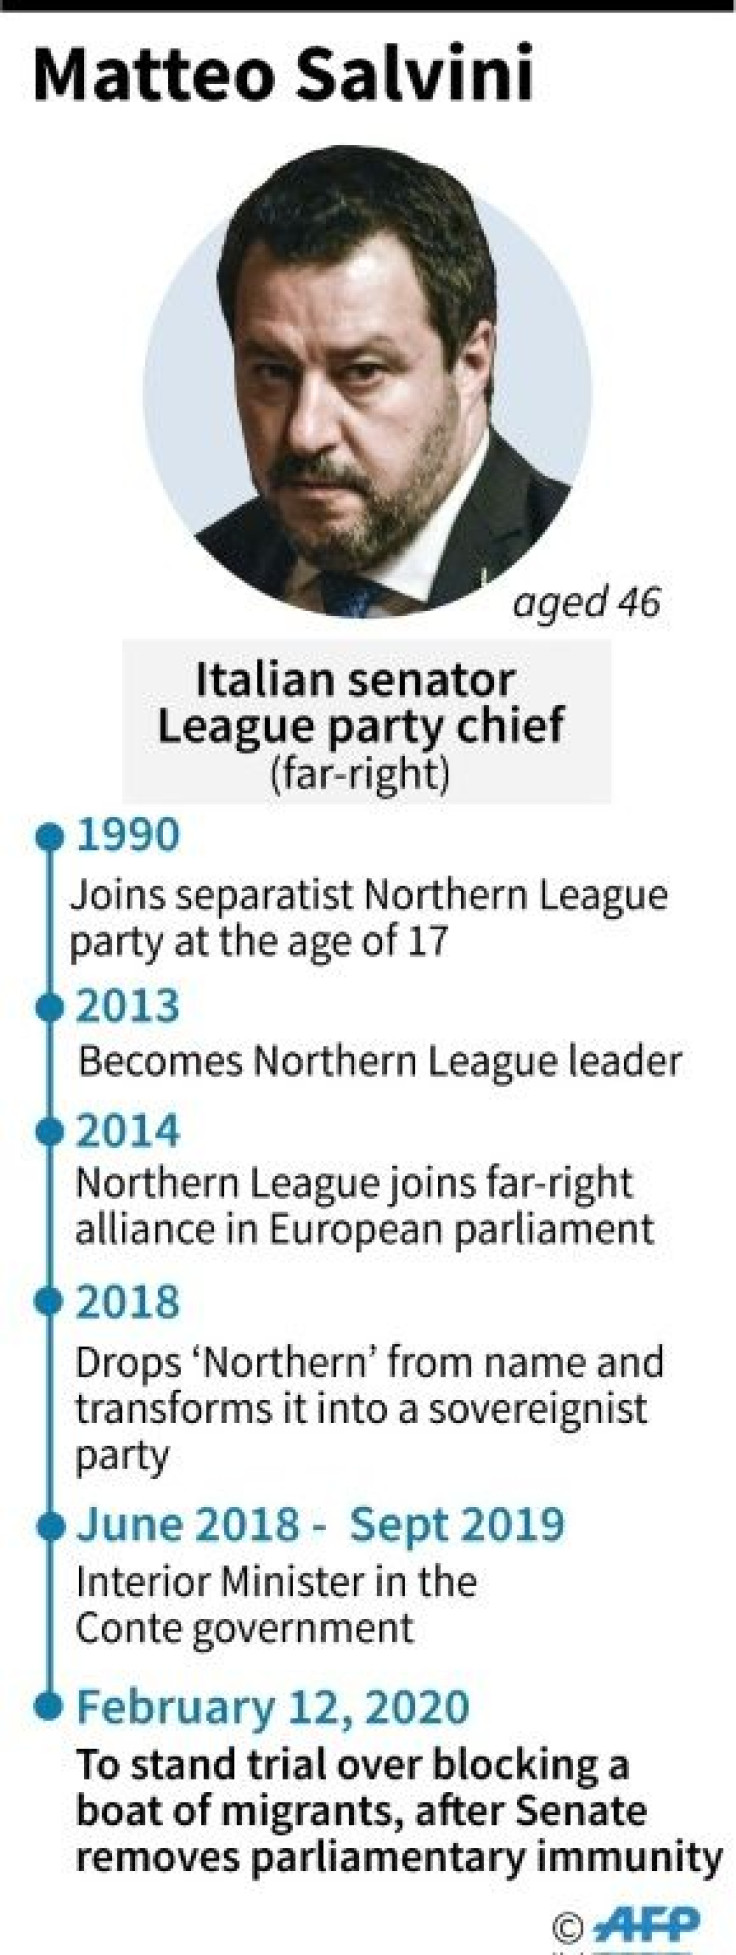 Profile of Italian former interior minister Matteo Salvini